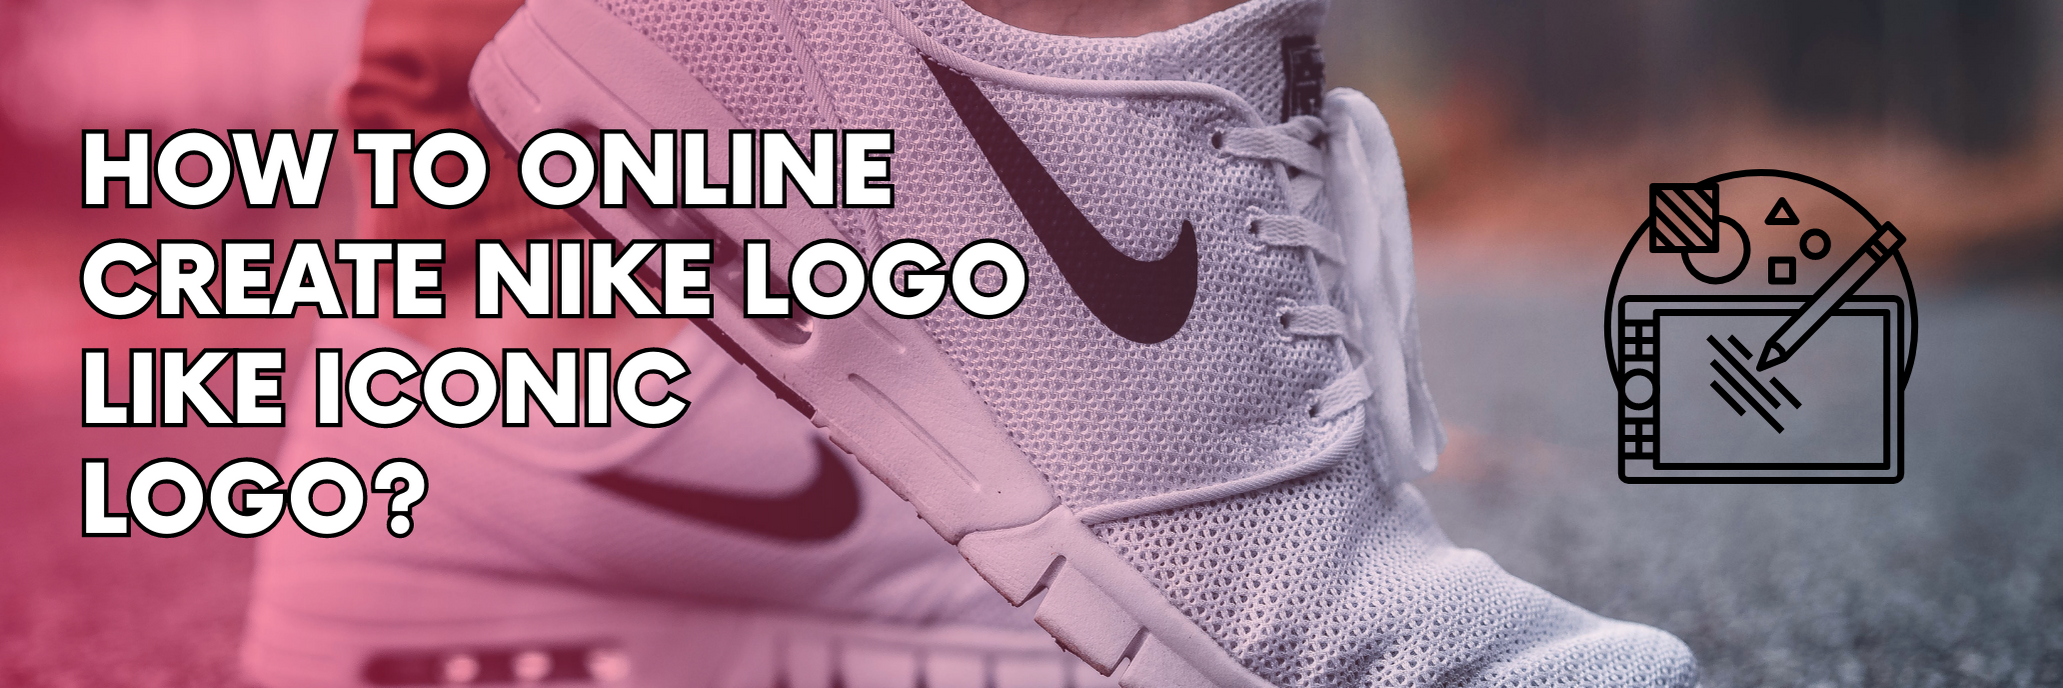 Online Create Nike Logo